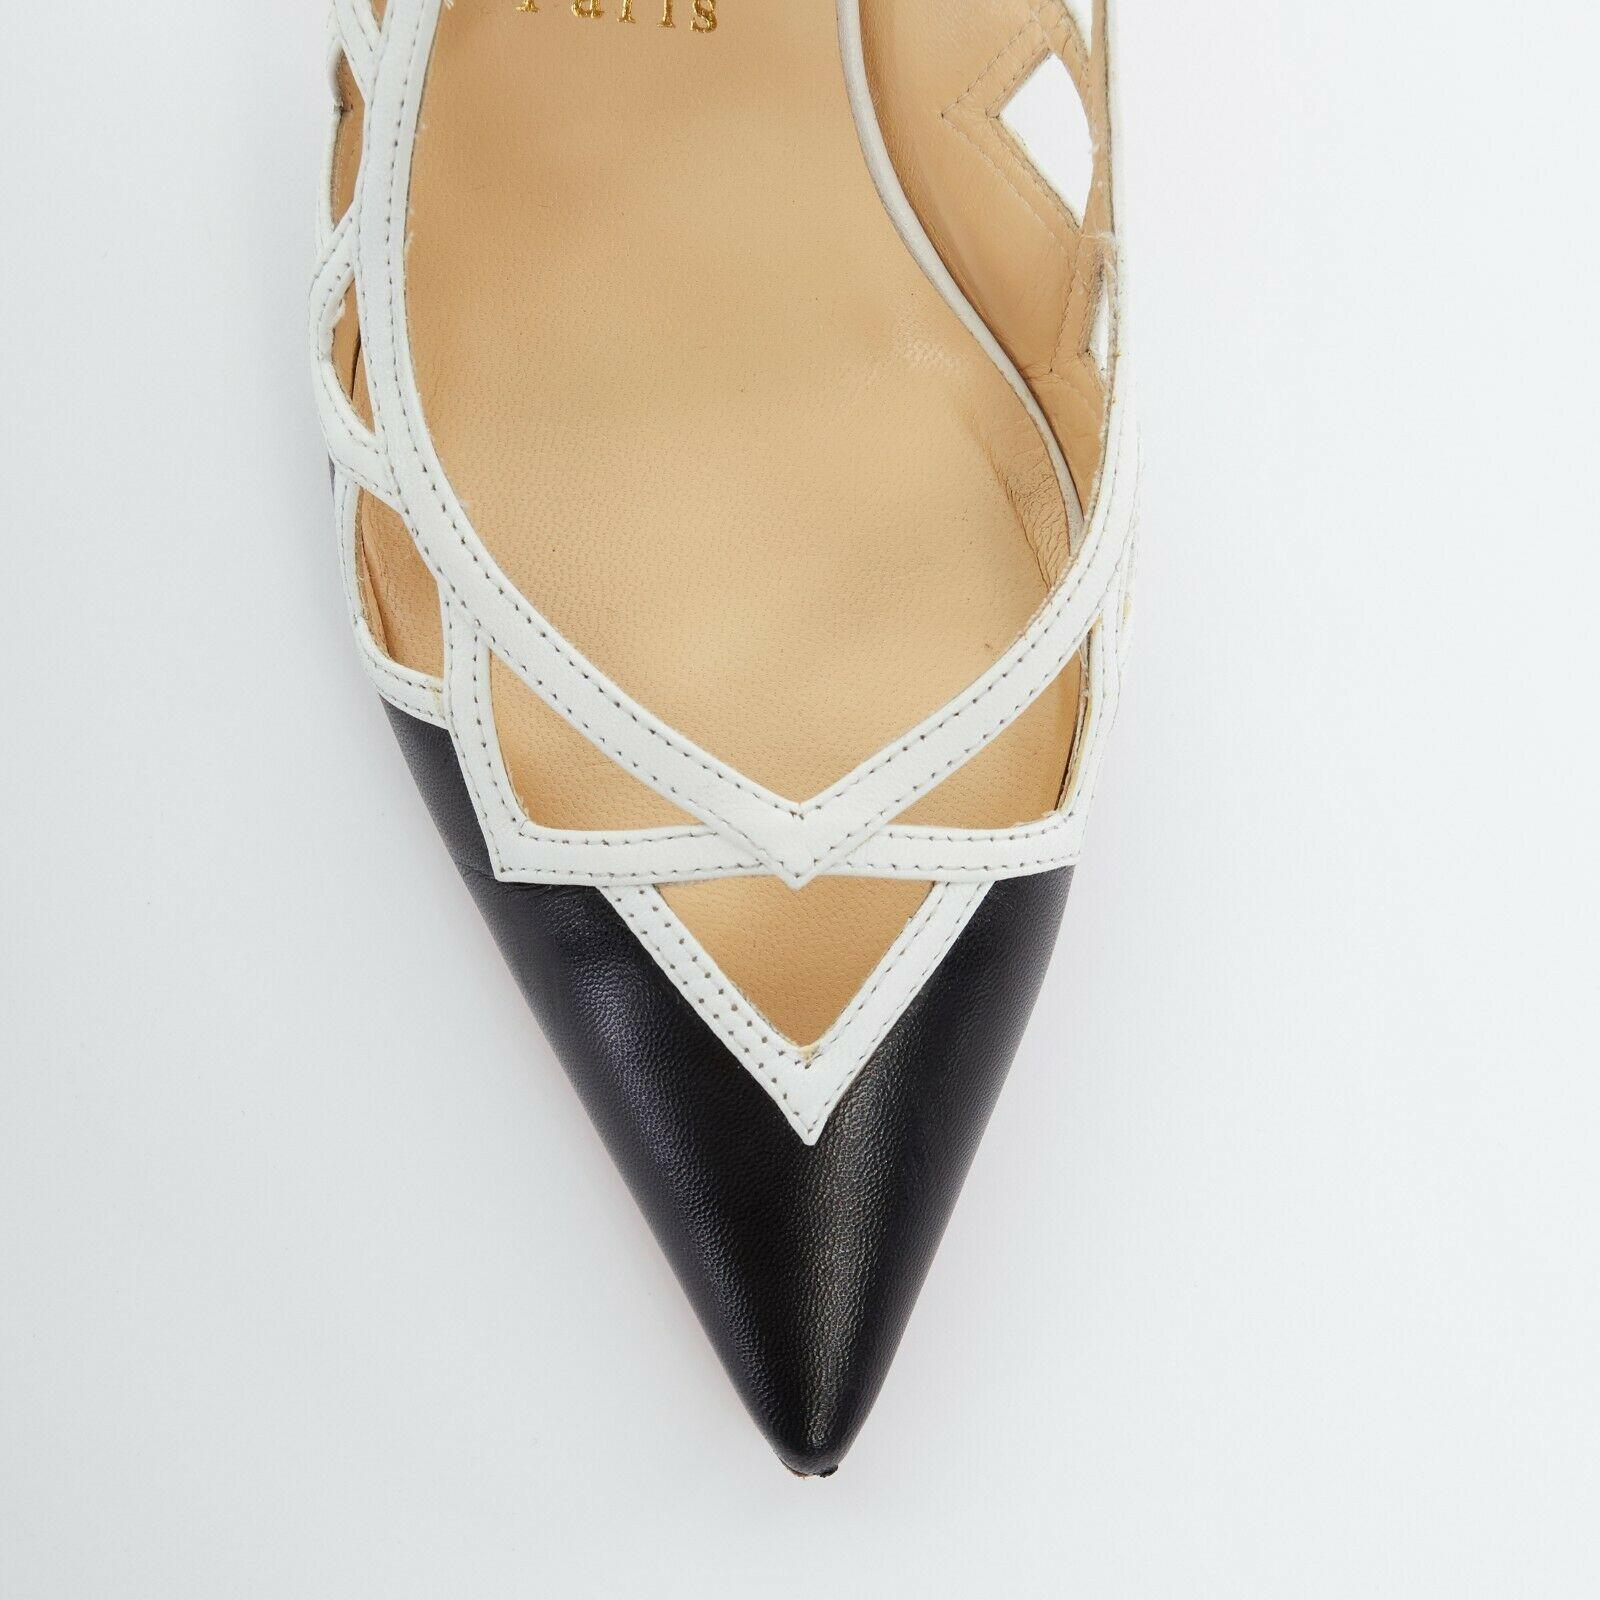 Women's CHRISTIAN LOUBOUTIN black white triangular cut out slingback pumps heels EU37